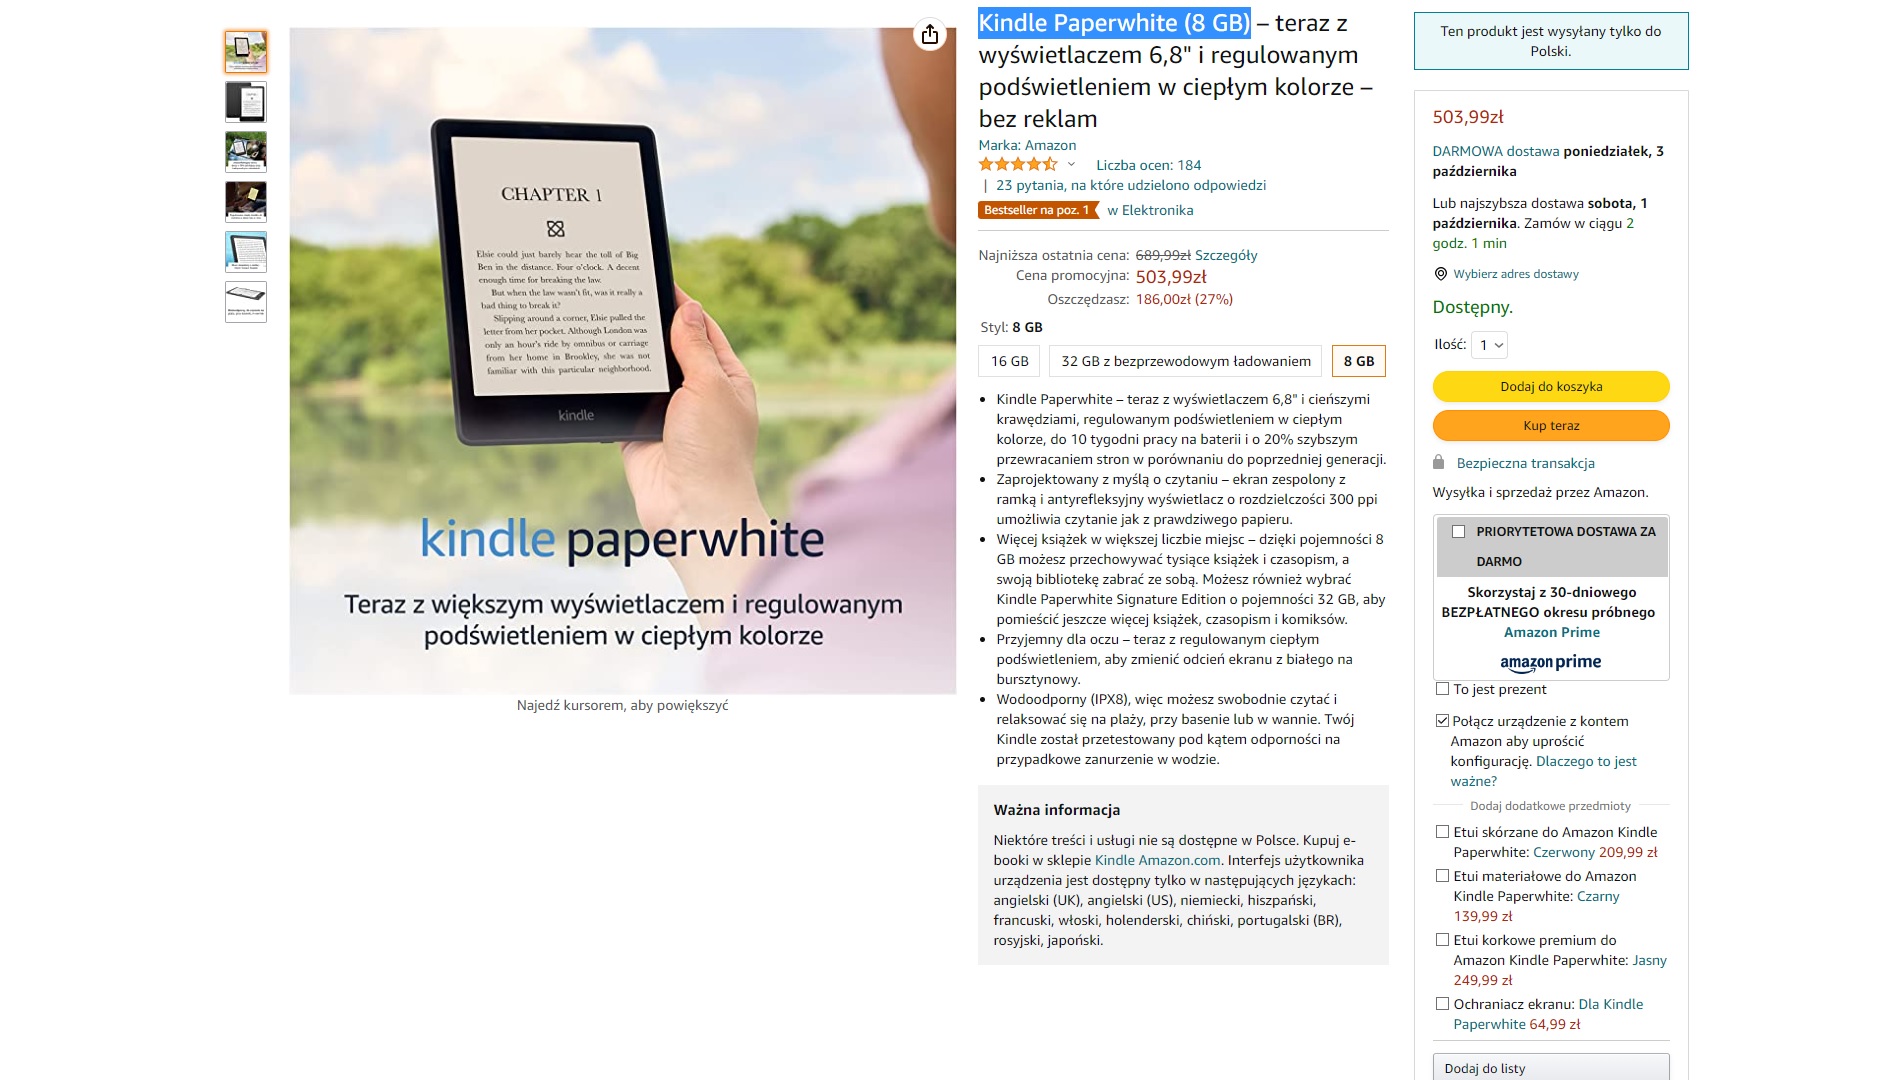 promocja na Kindle Paperwhite fot. Tabletowo.pl